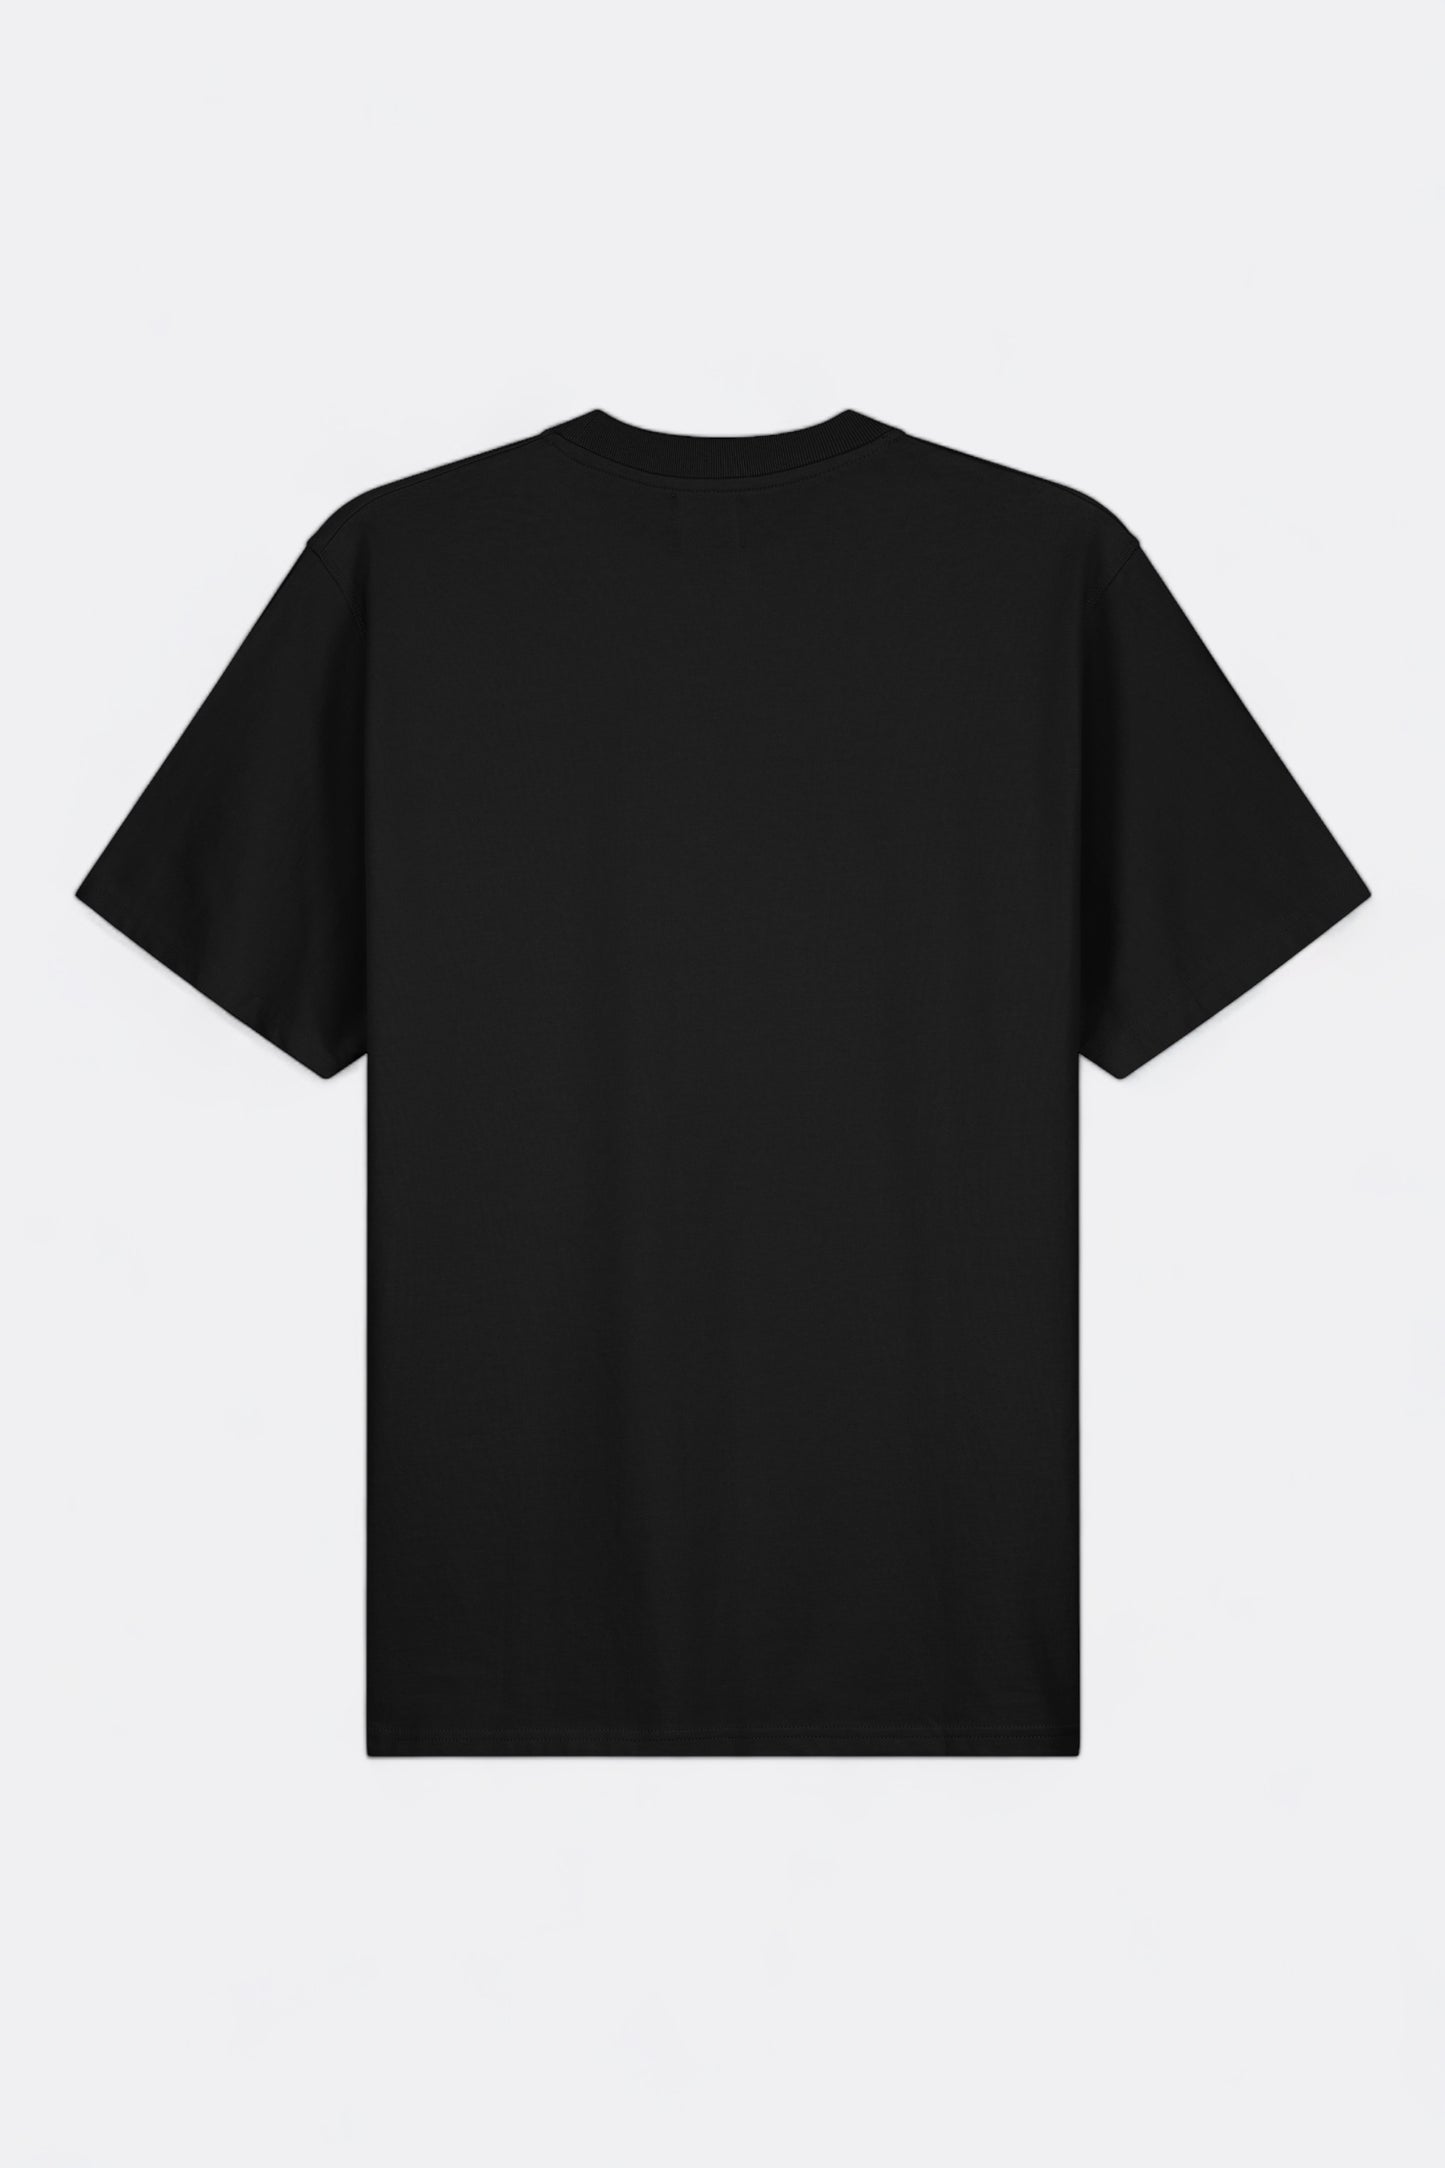 Arte - Teo Small Heart T-shirt (Black)